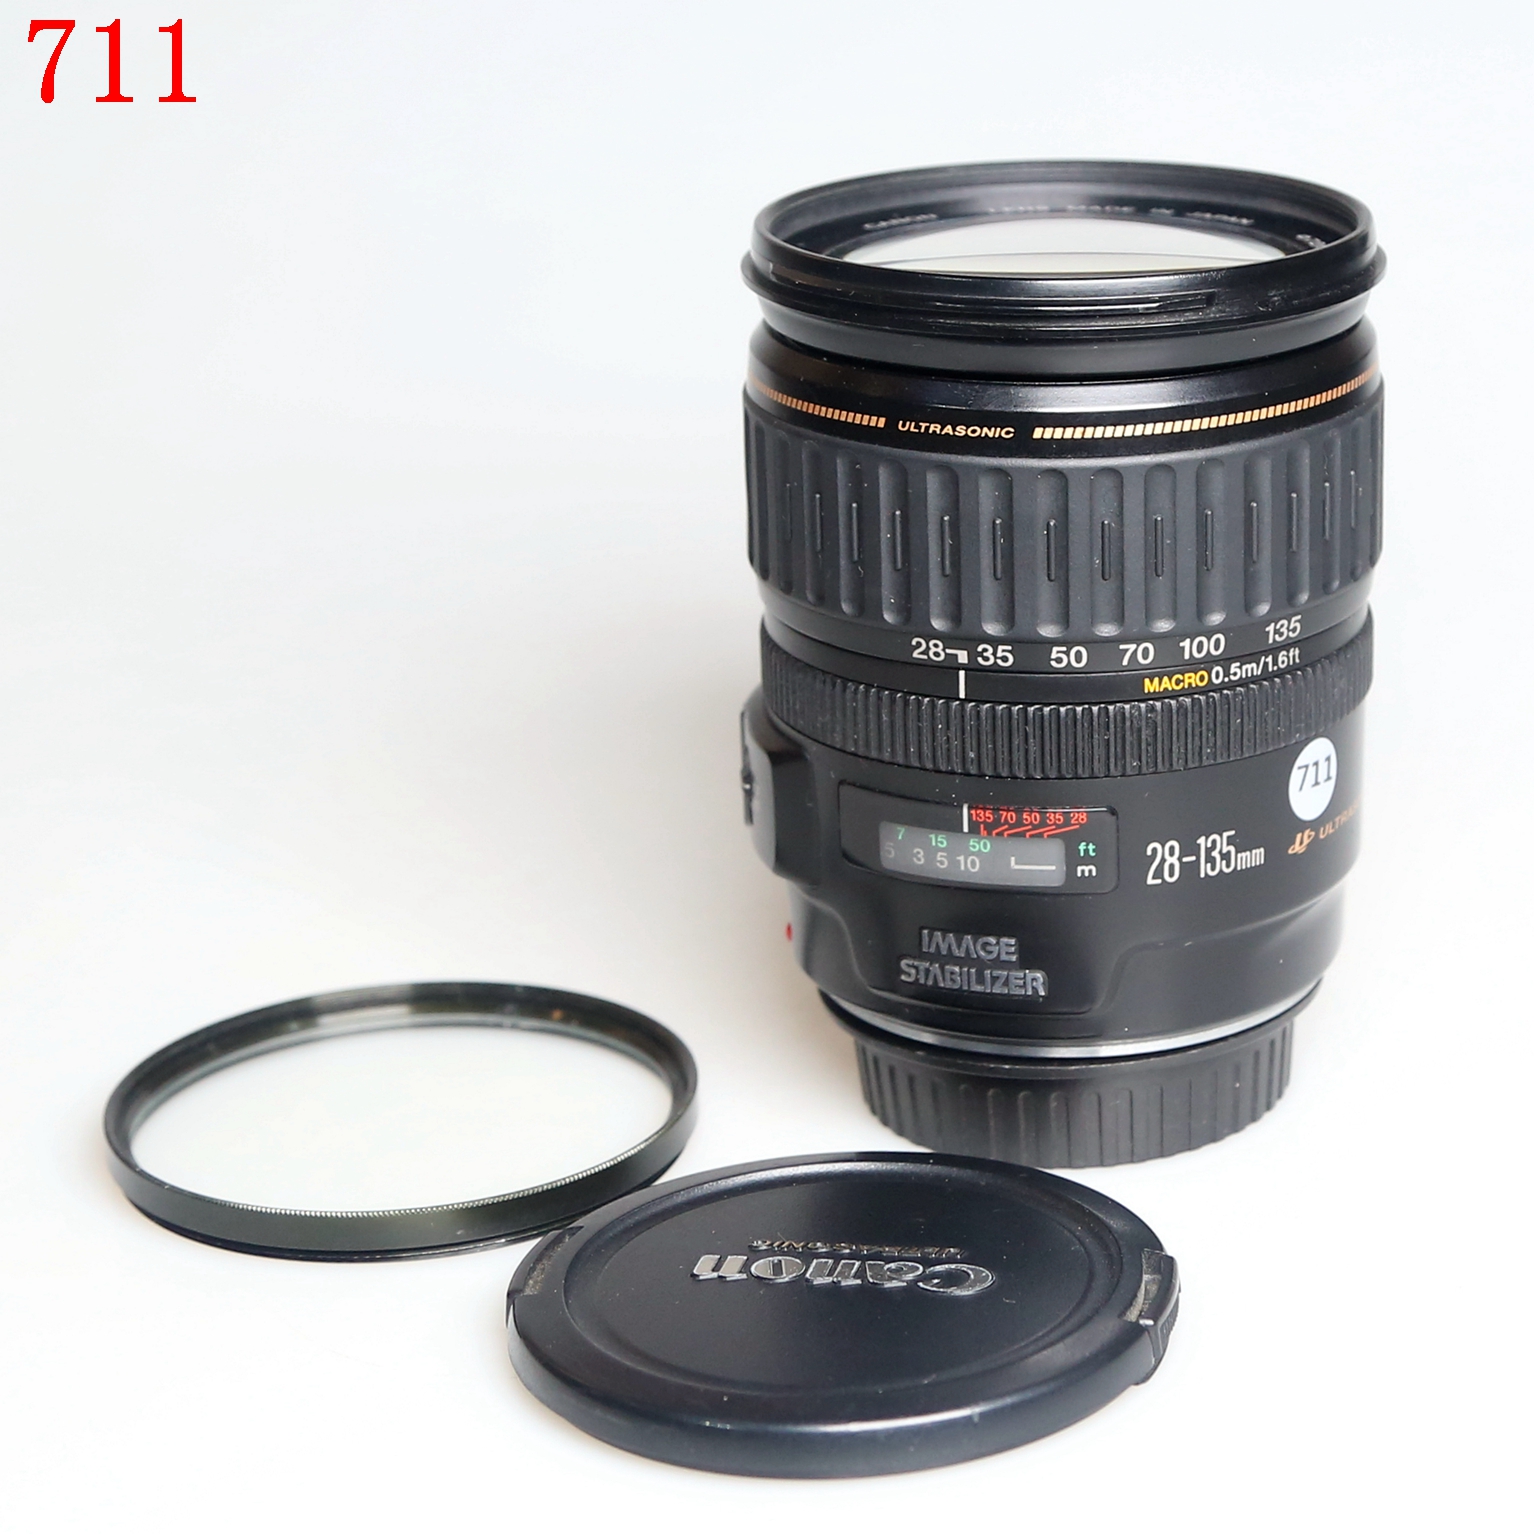 佳能 EF 28-135mm f/3.5-5.6 IS USM全画幅单反镜头编号711